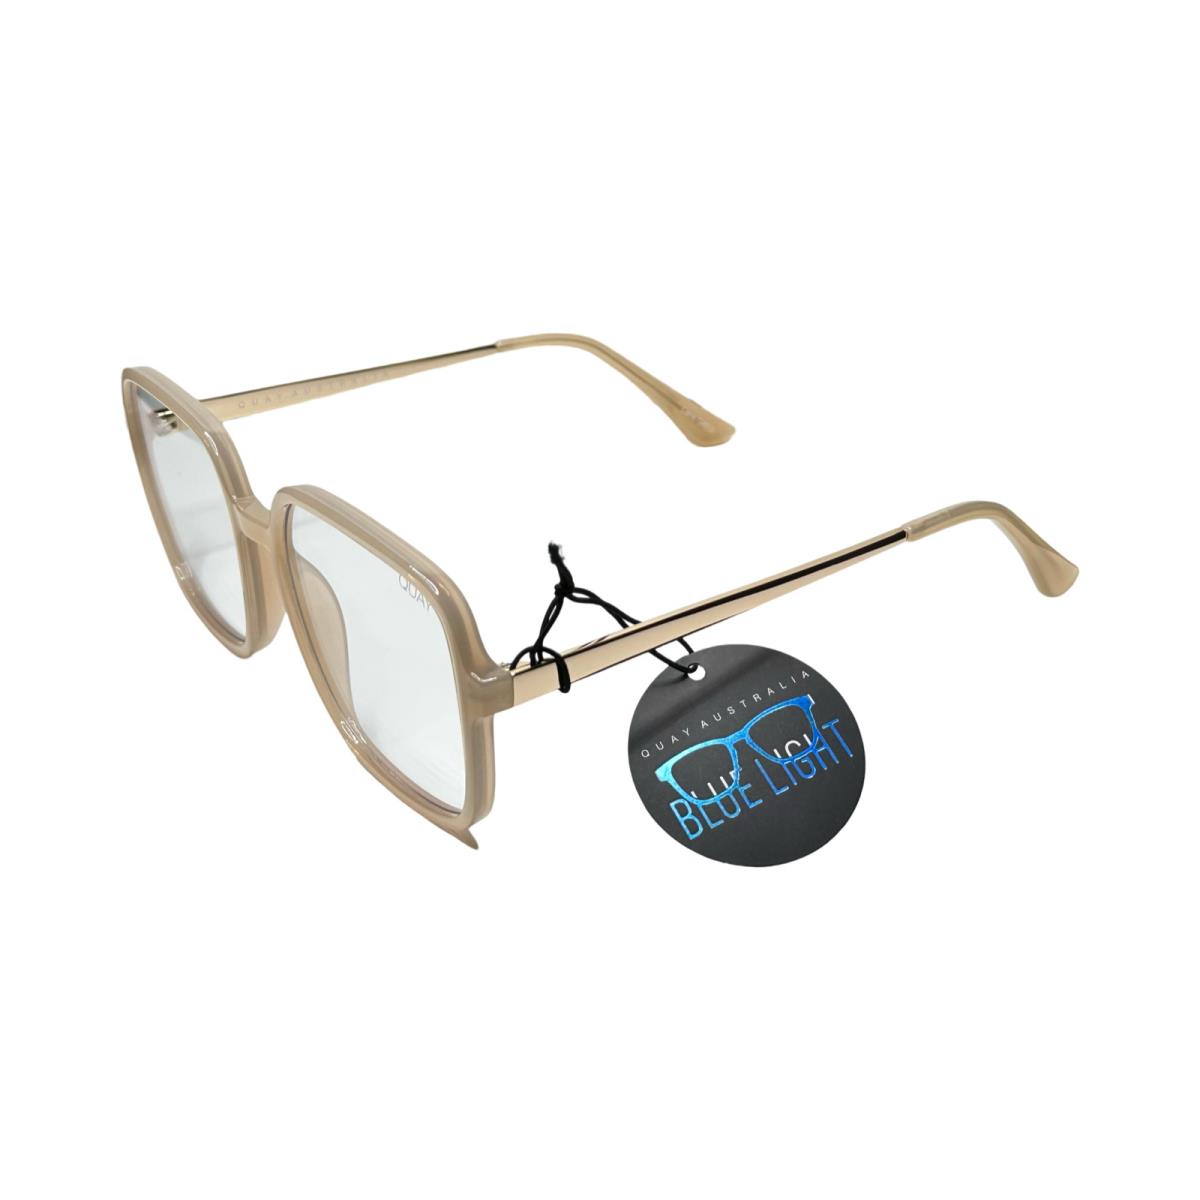 Quay Blue Light Blocking Eyeglasses 9 to 5 Clear Lens Tan Frame Gold Arm